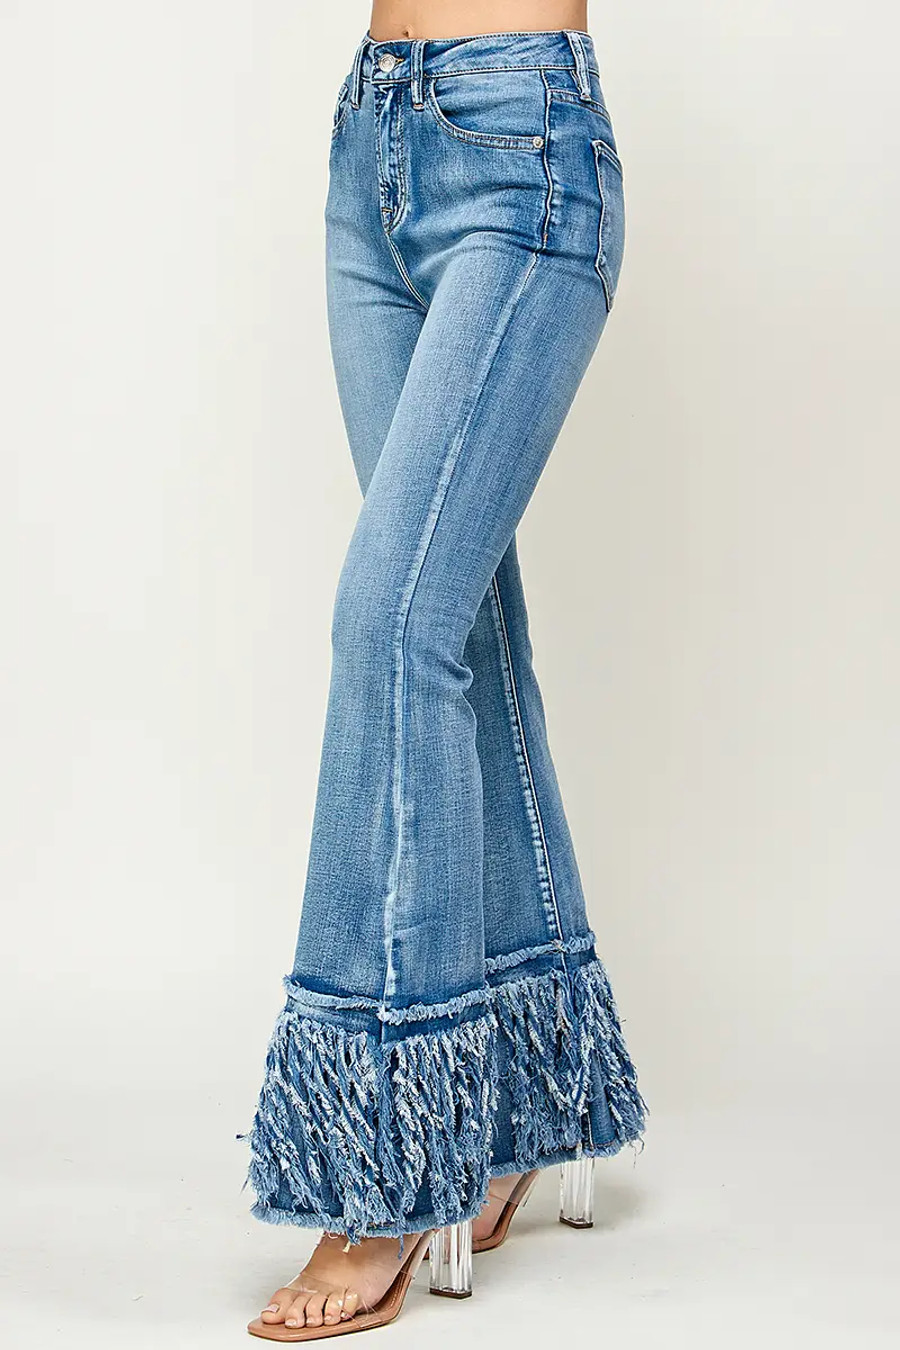 I&M Jeans - High Rise - Frayed Flare - Medium Wash